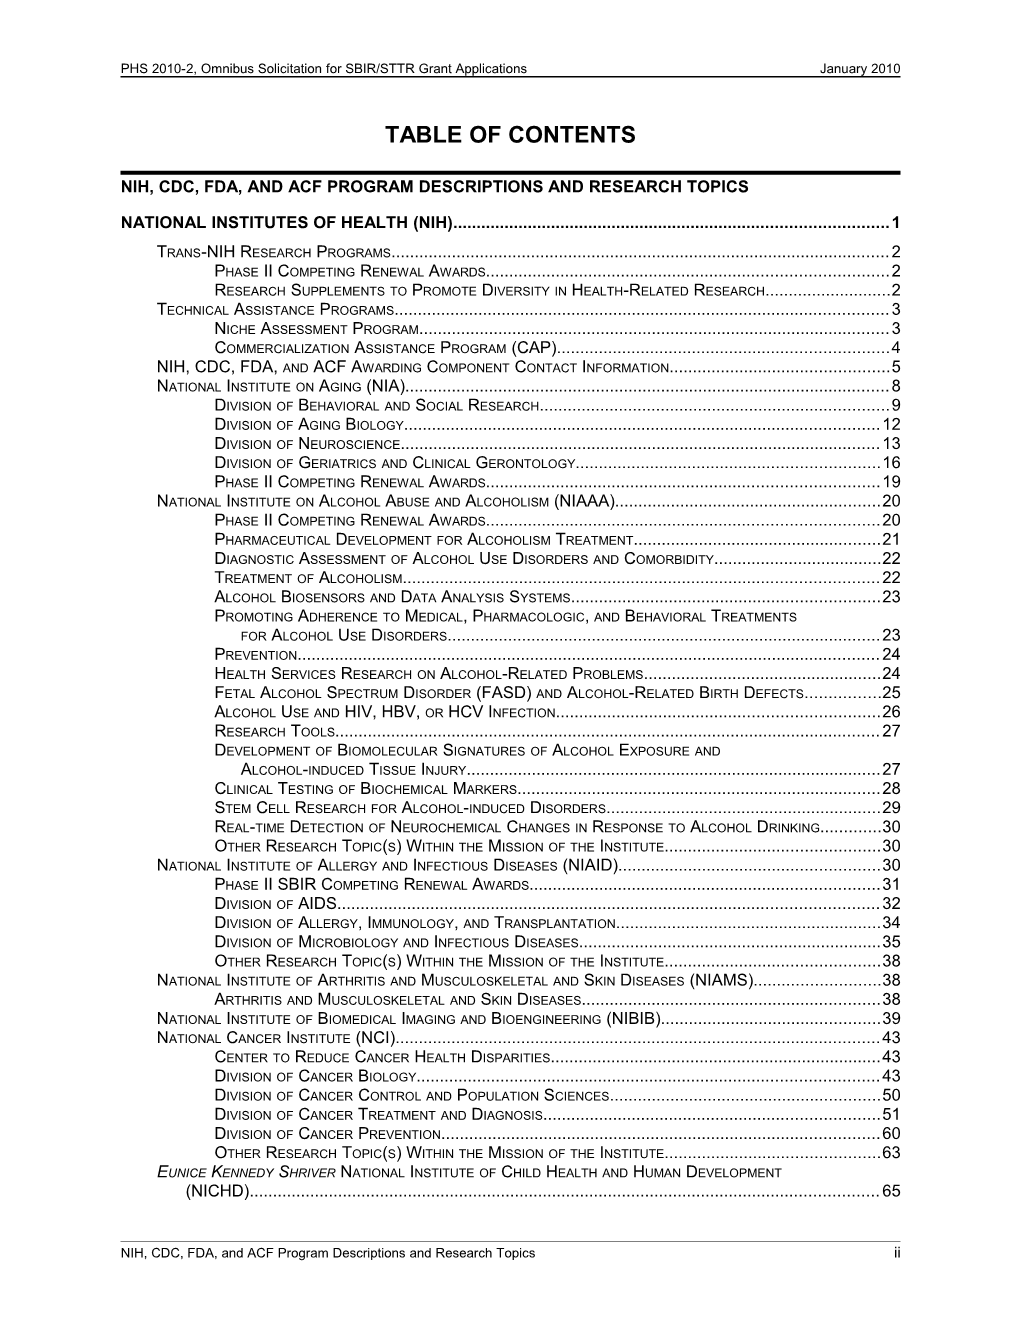 PHS 2010-2 SBIR/STTR Program Descriptions And Research Topics